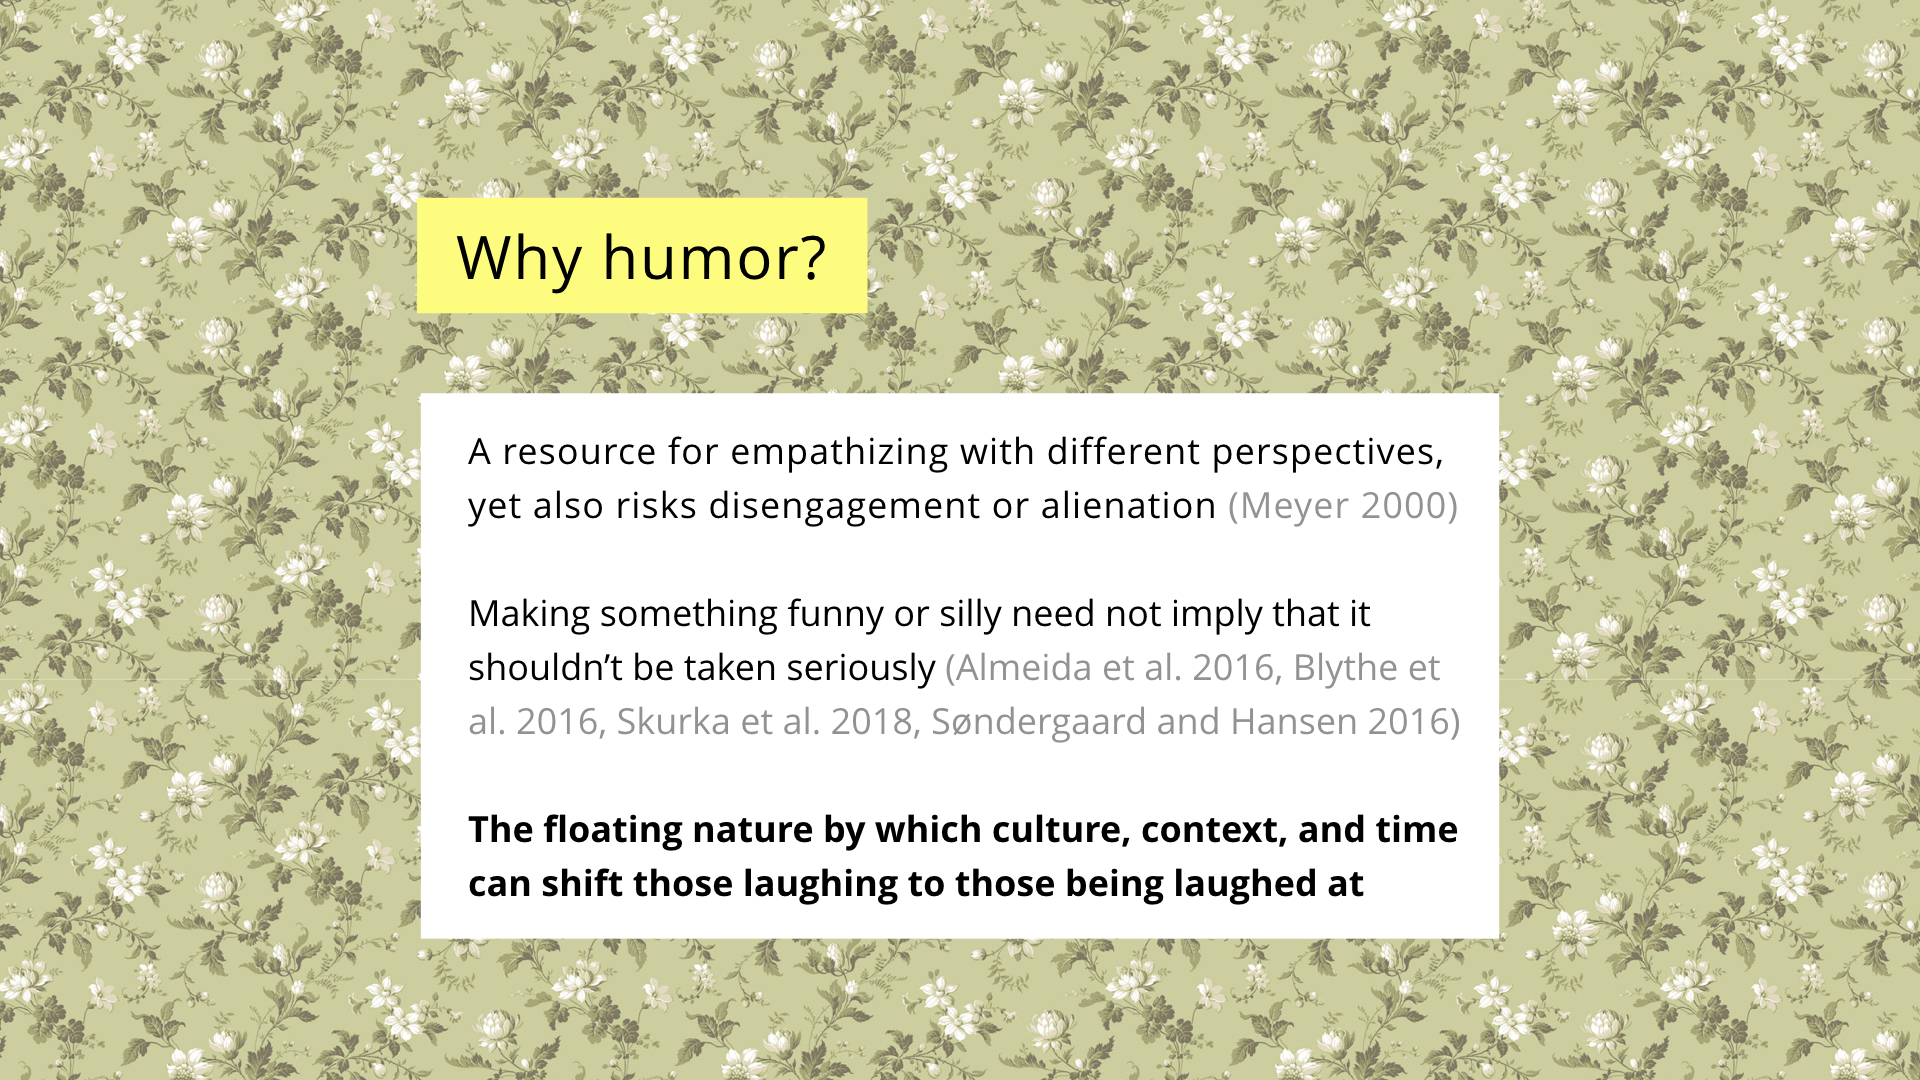 NordiCHI future scenarios presentation: Why use humor in design?